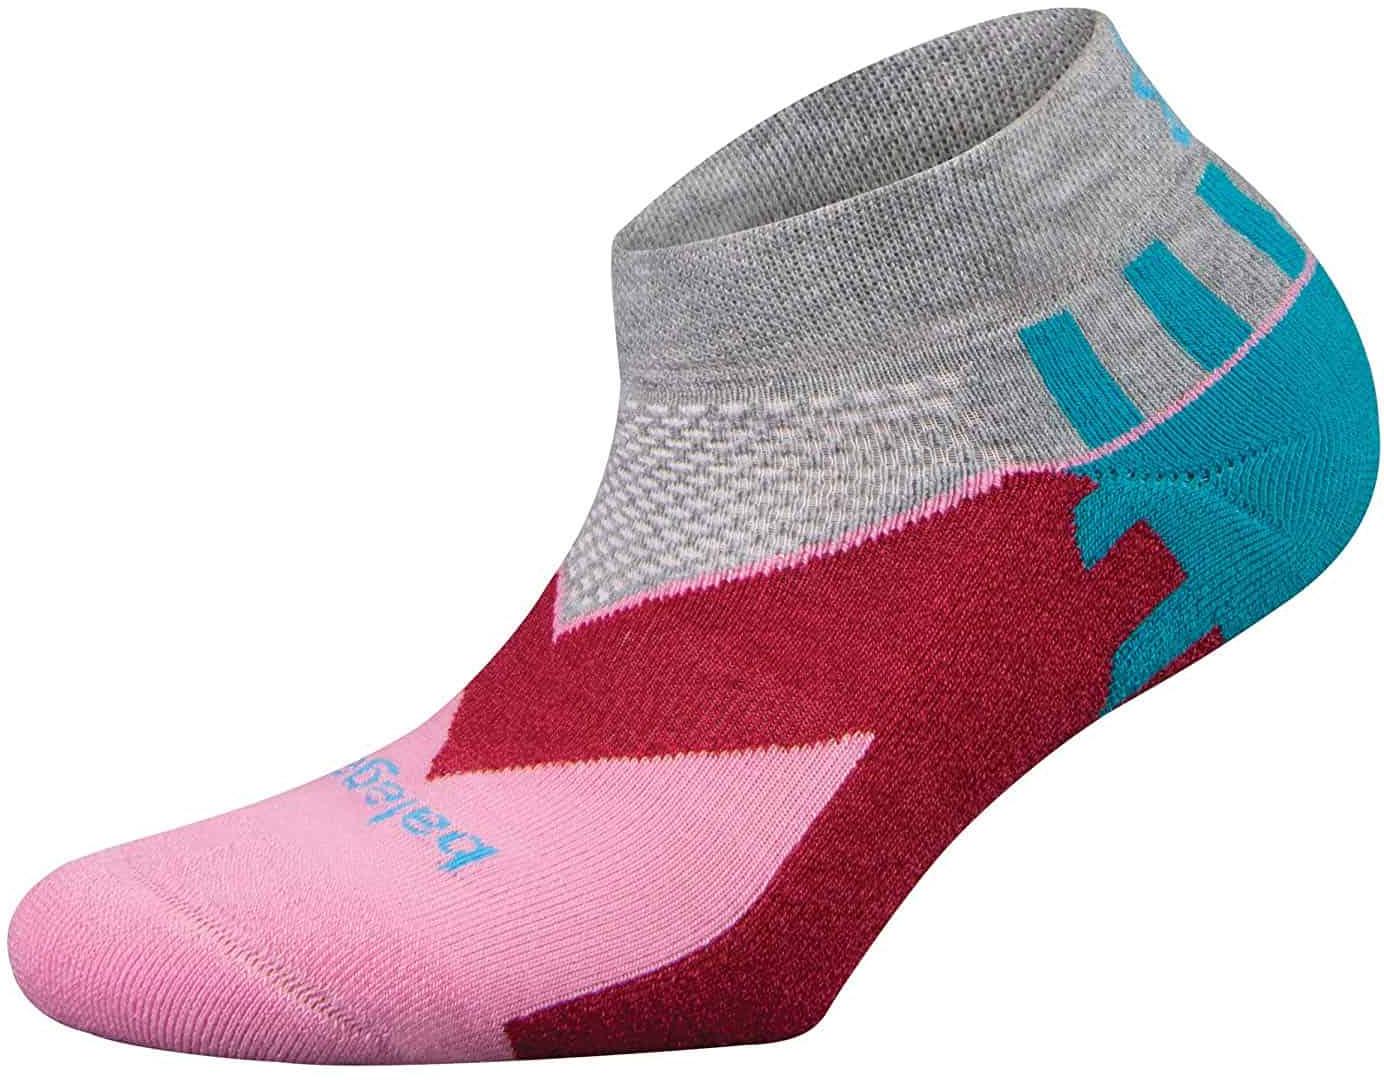 Balega Womens Enduro Low Cut Sock - Mid Grey/pink